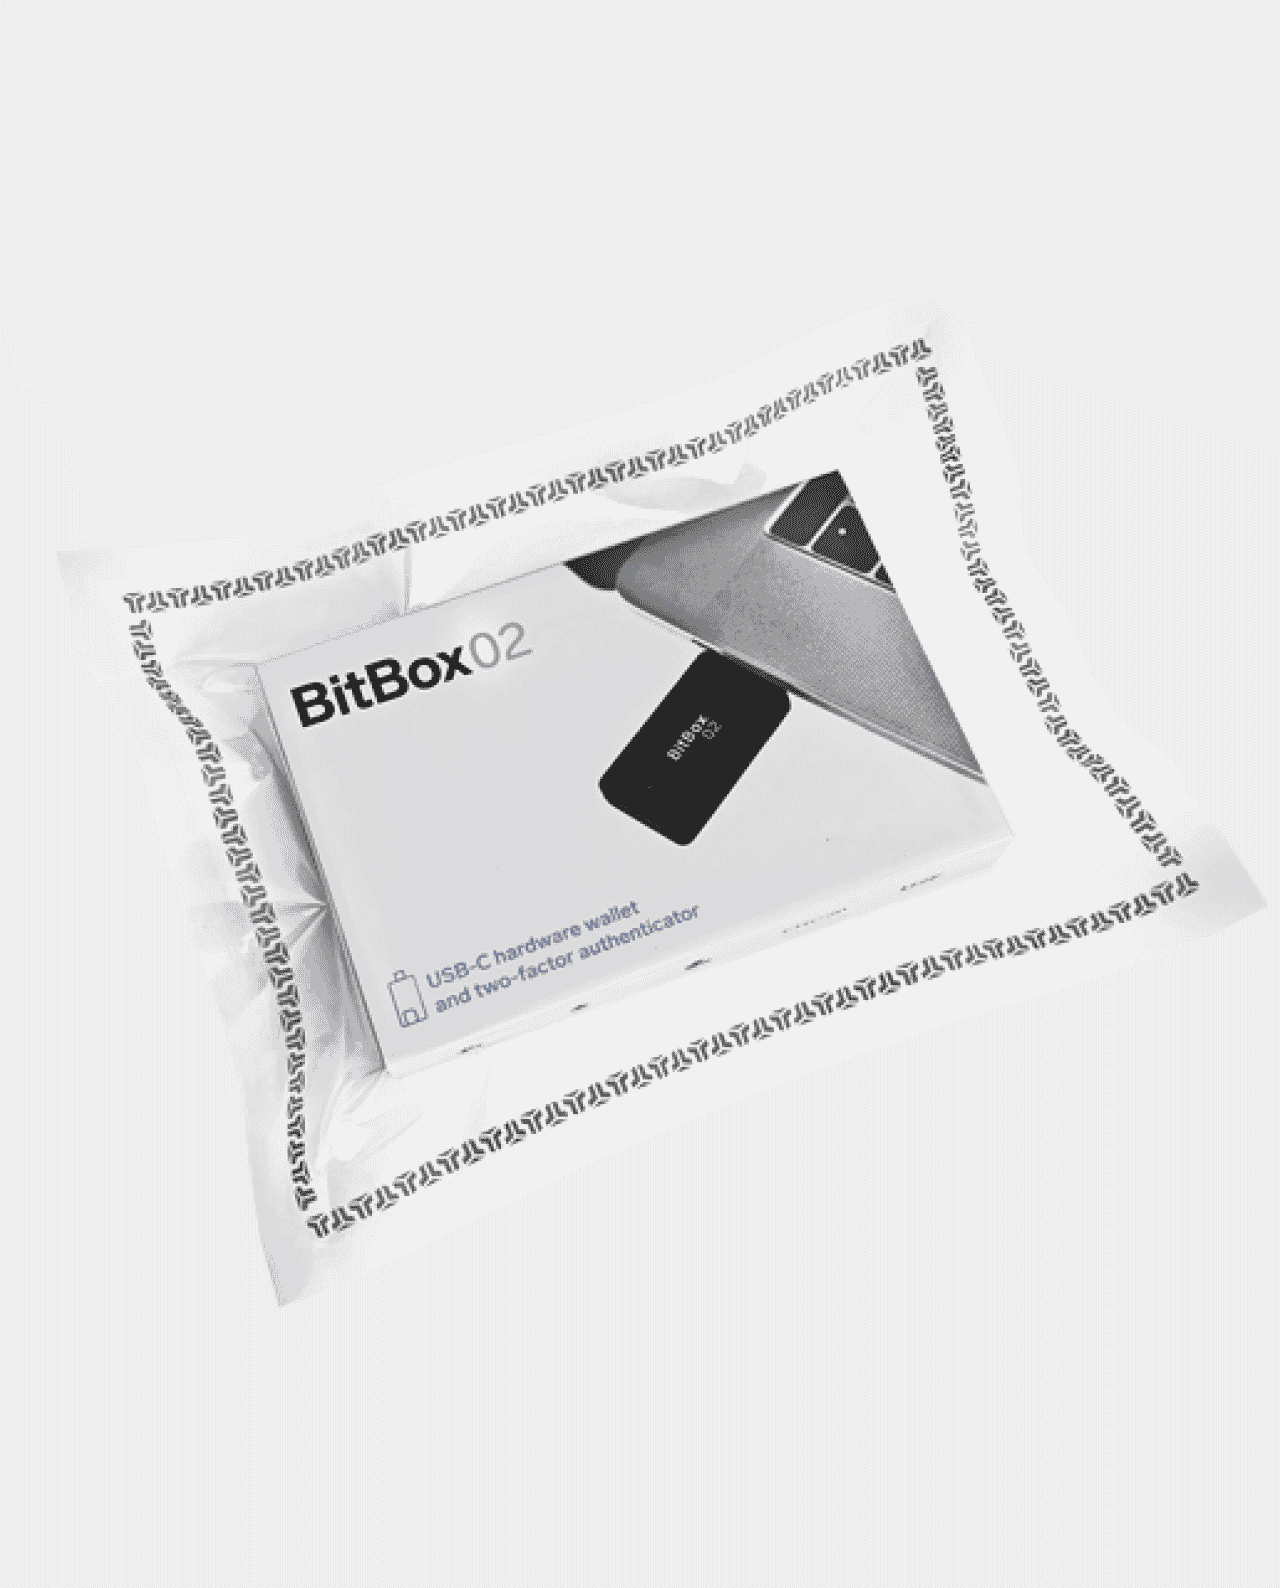 купить BitBox02 Multi edition